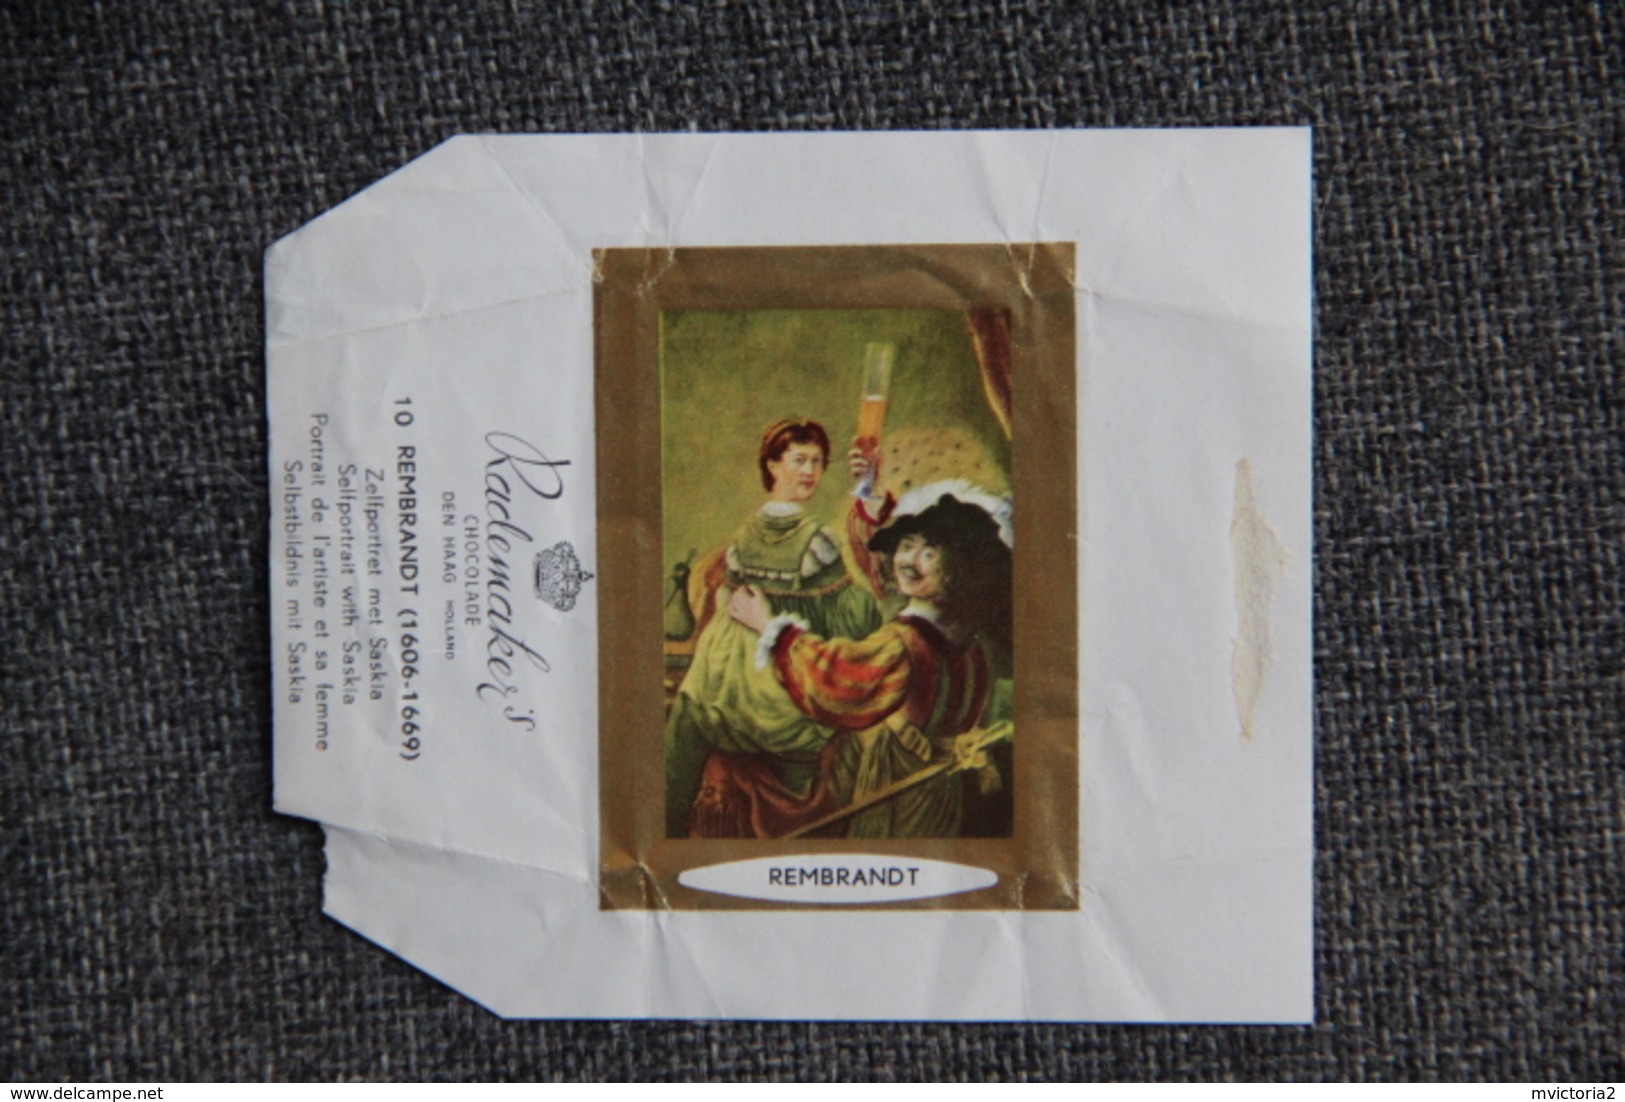 Lot de 9 étiquettes - CHOCOLAT RADEMAKER - DEN HAAG HOLLAND - Série de Peintres Flamands.